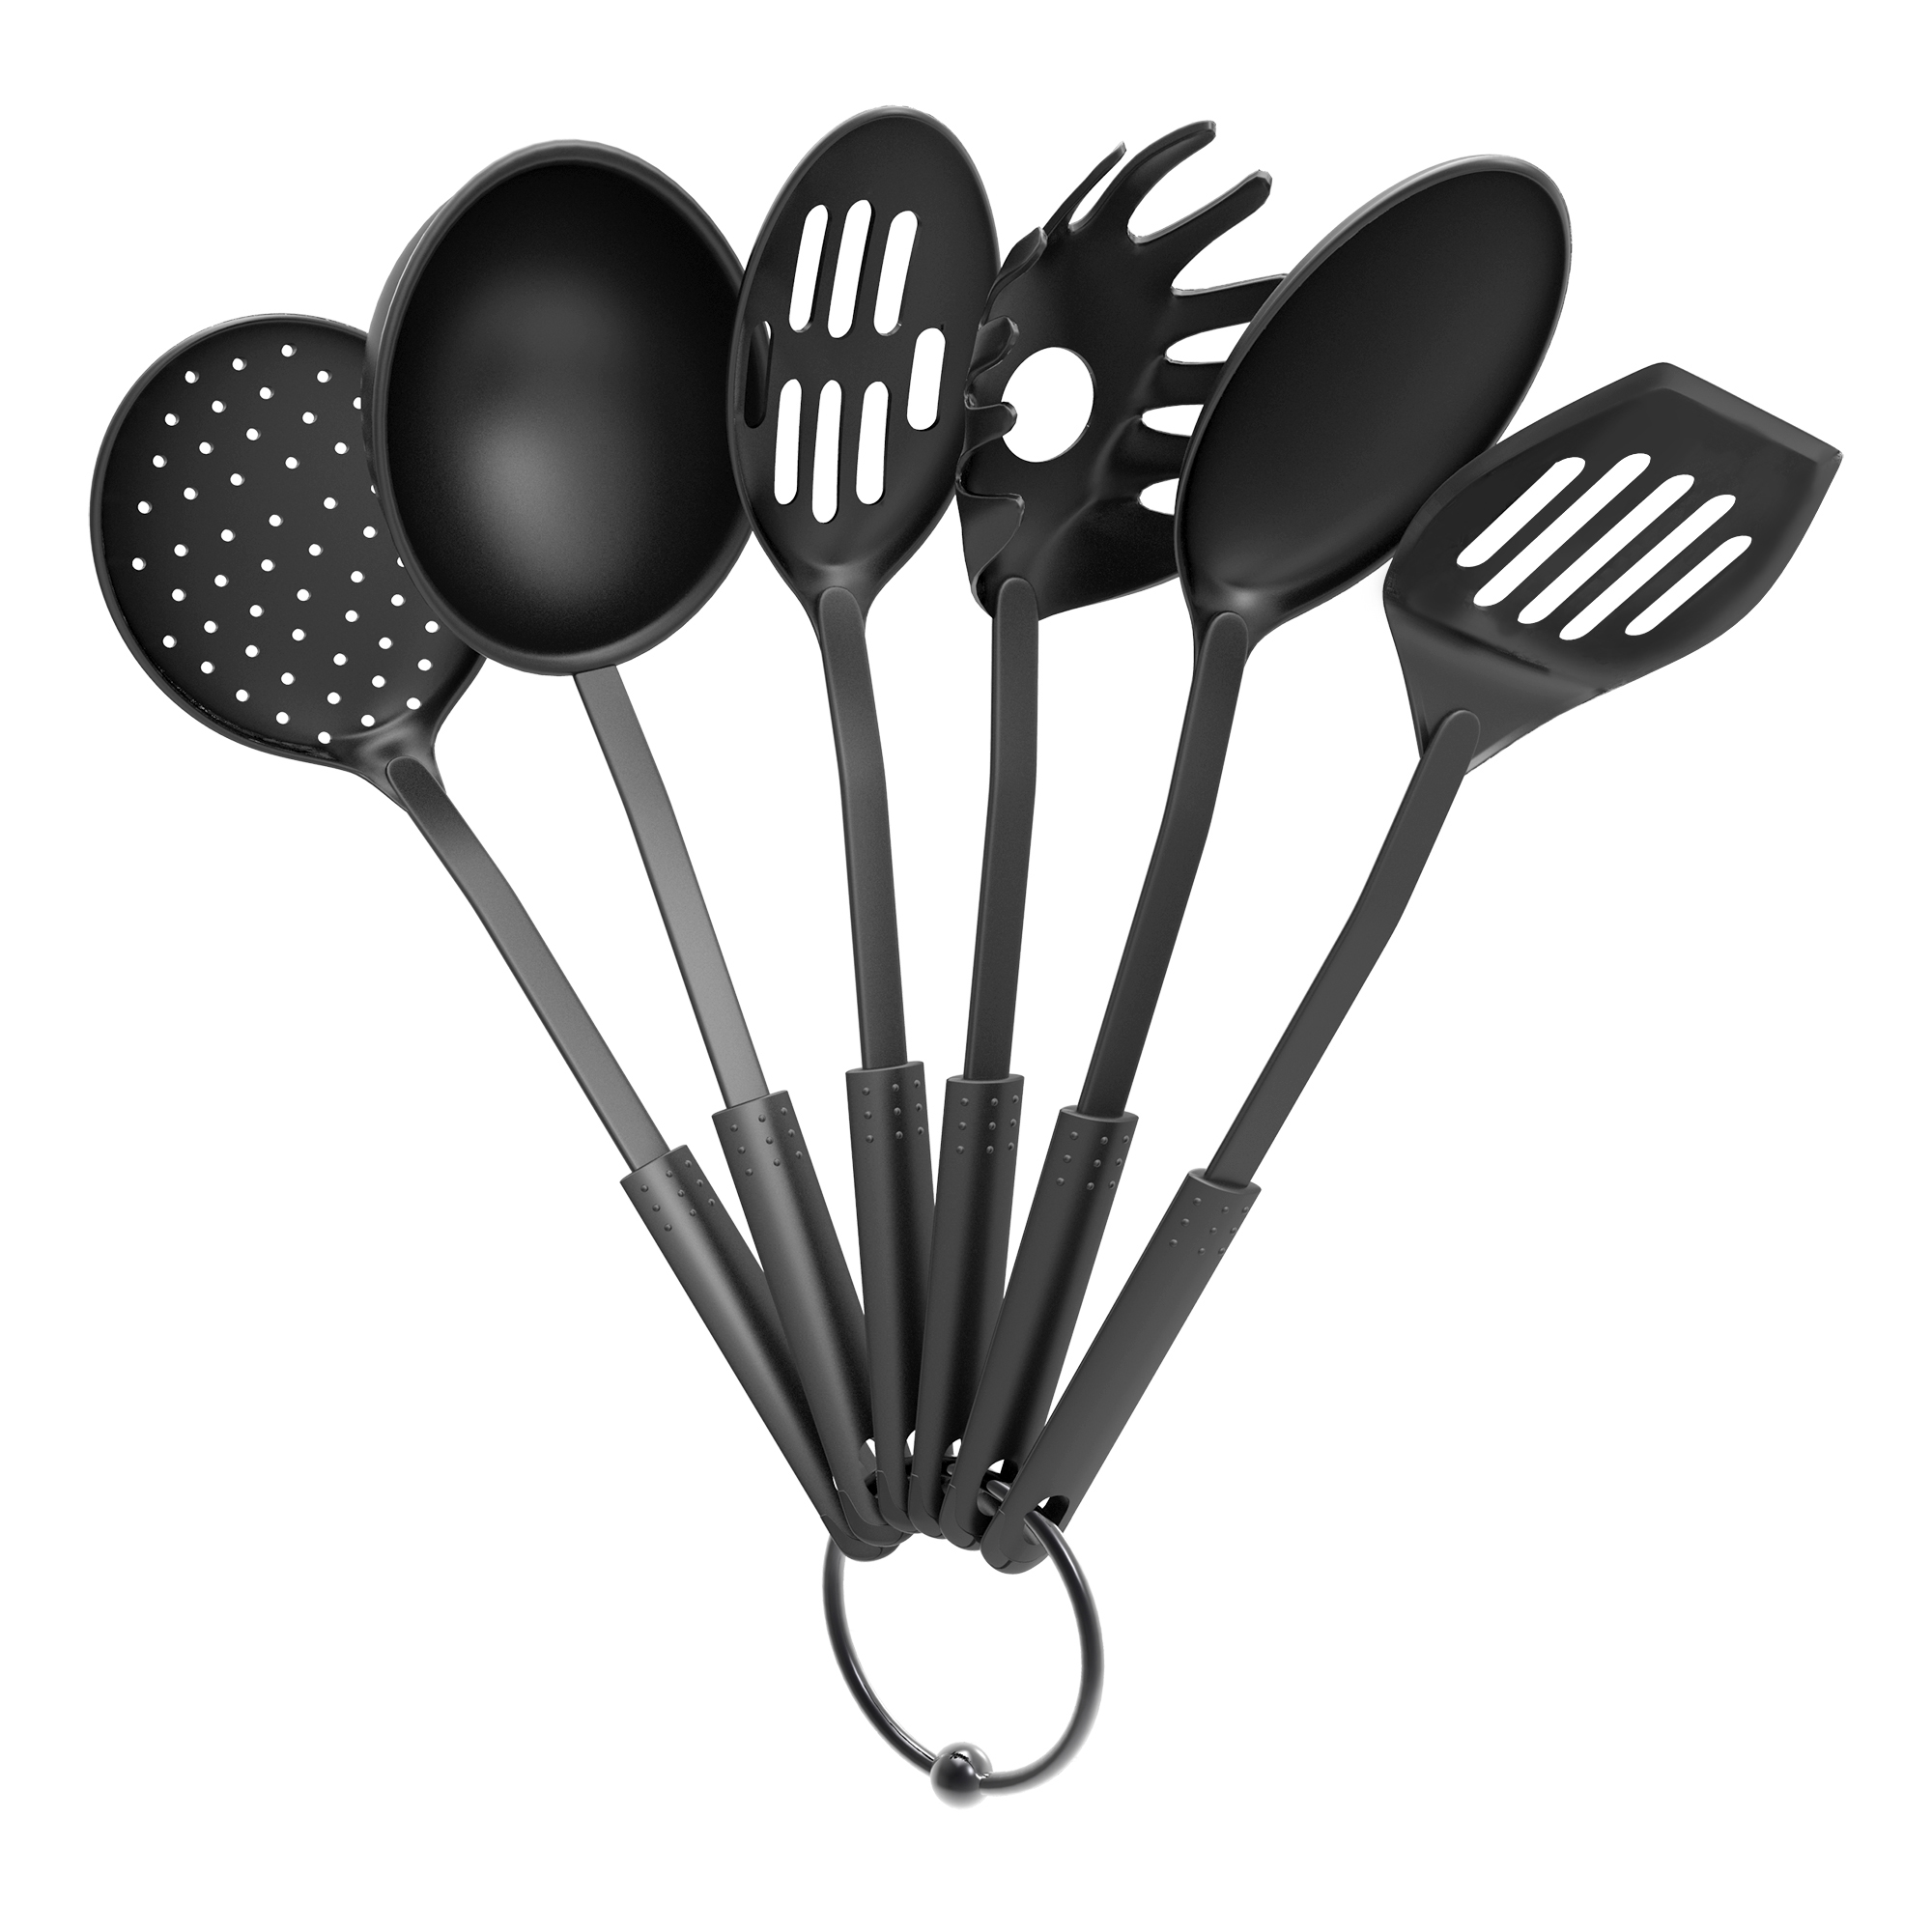 Chef Buddy 6-Piece Plastic Kitchen Utensil Set – Nonstick-Safe Tools, Black - image 1 of 8